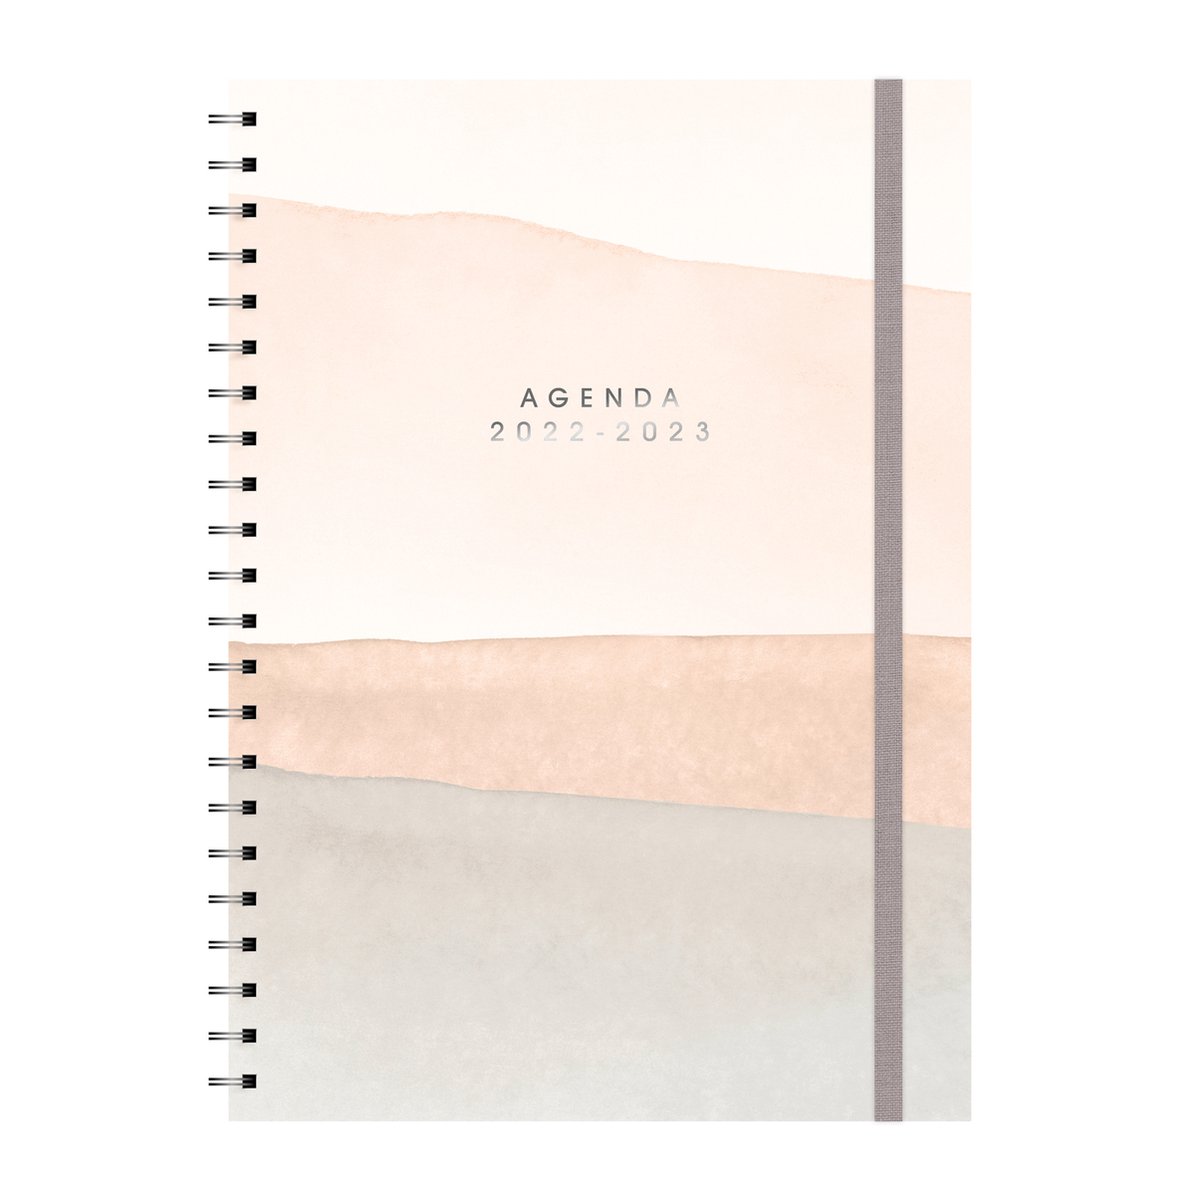 Hobbit - Agenda/planner - 2022/2023 - Waterverf tinten - Hardcover - Calendarium horizontaal - Ringband - 30,3x23cm(A4)